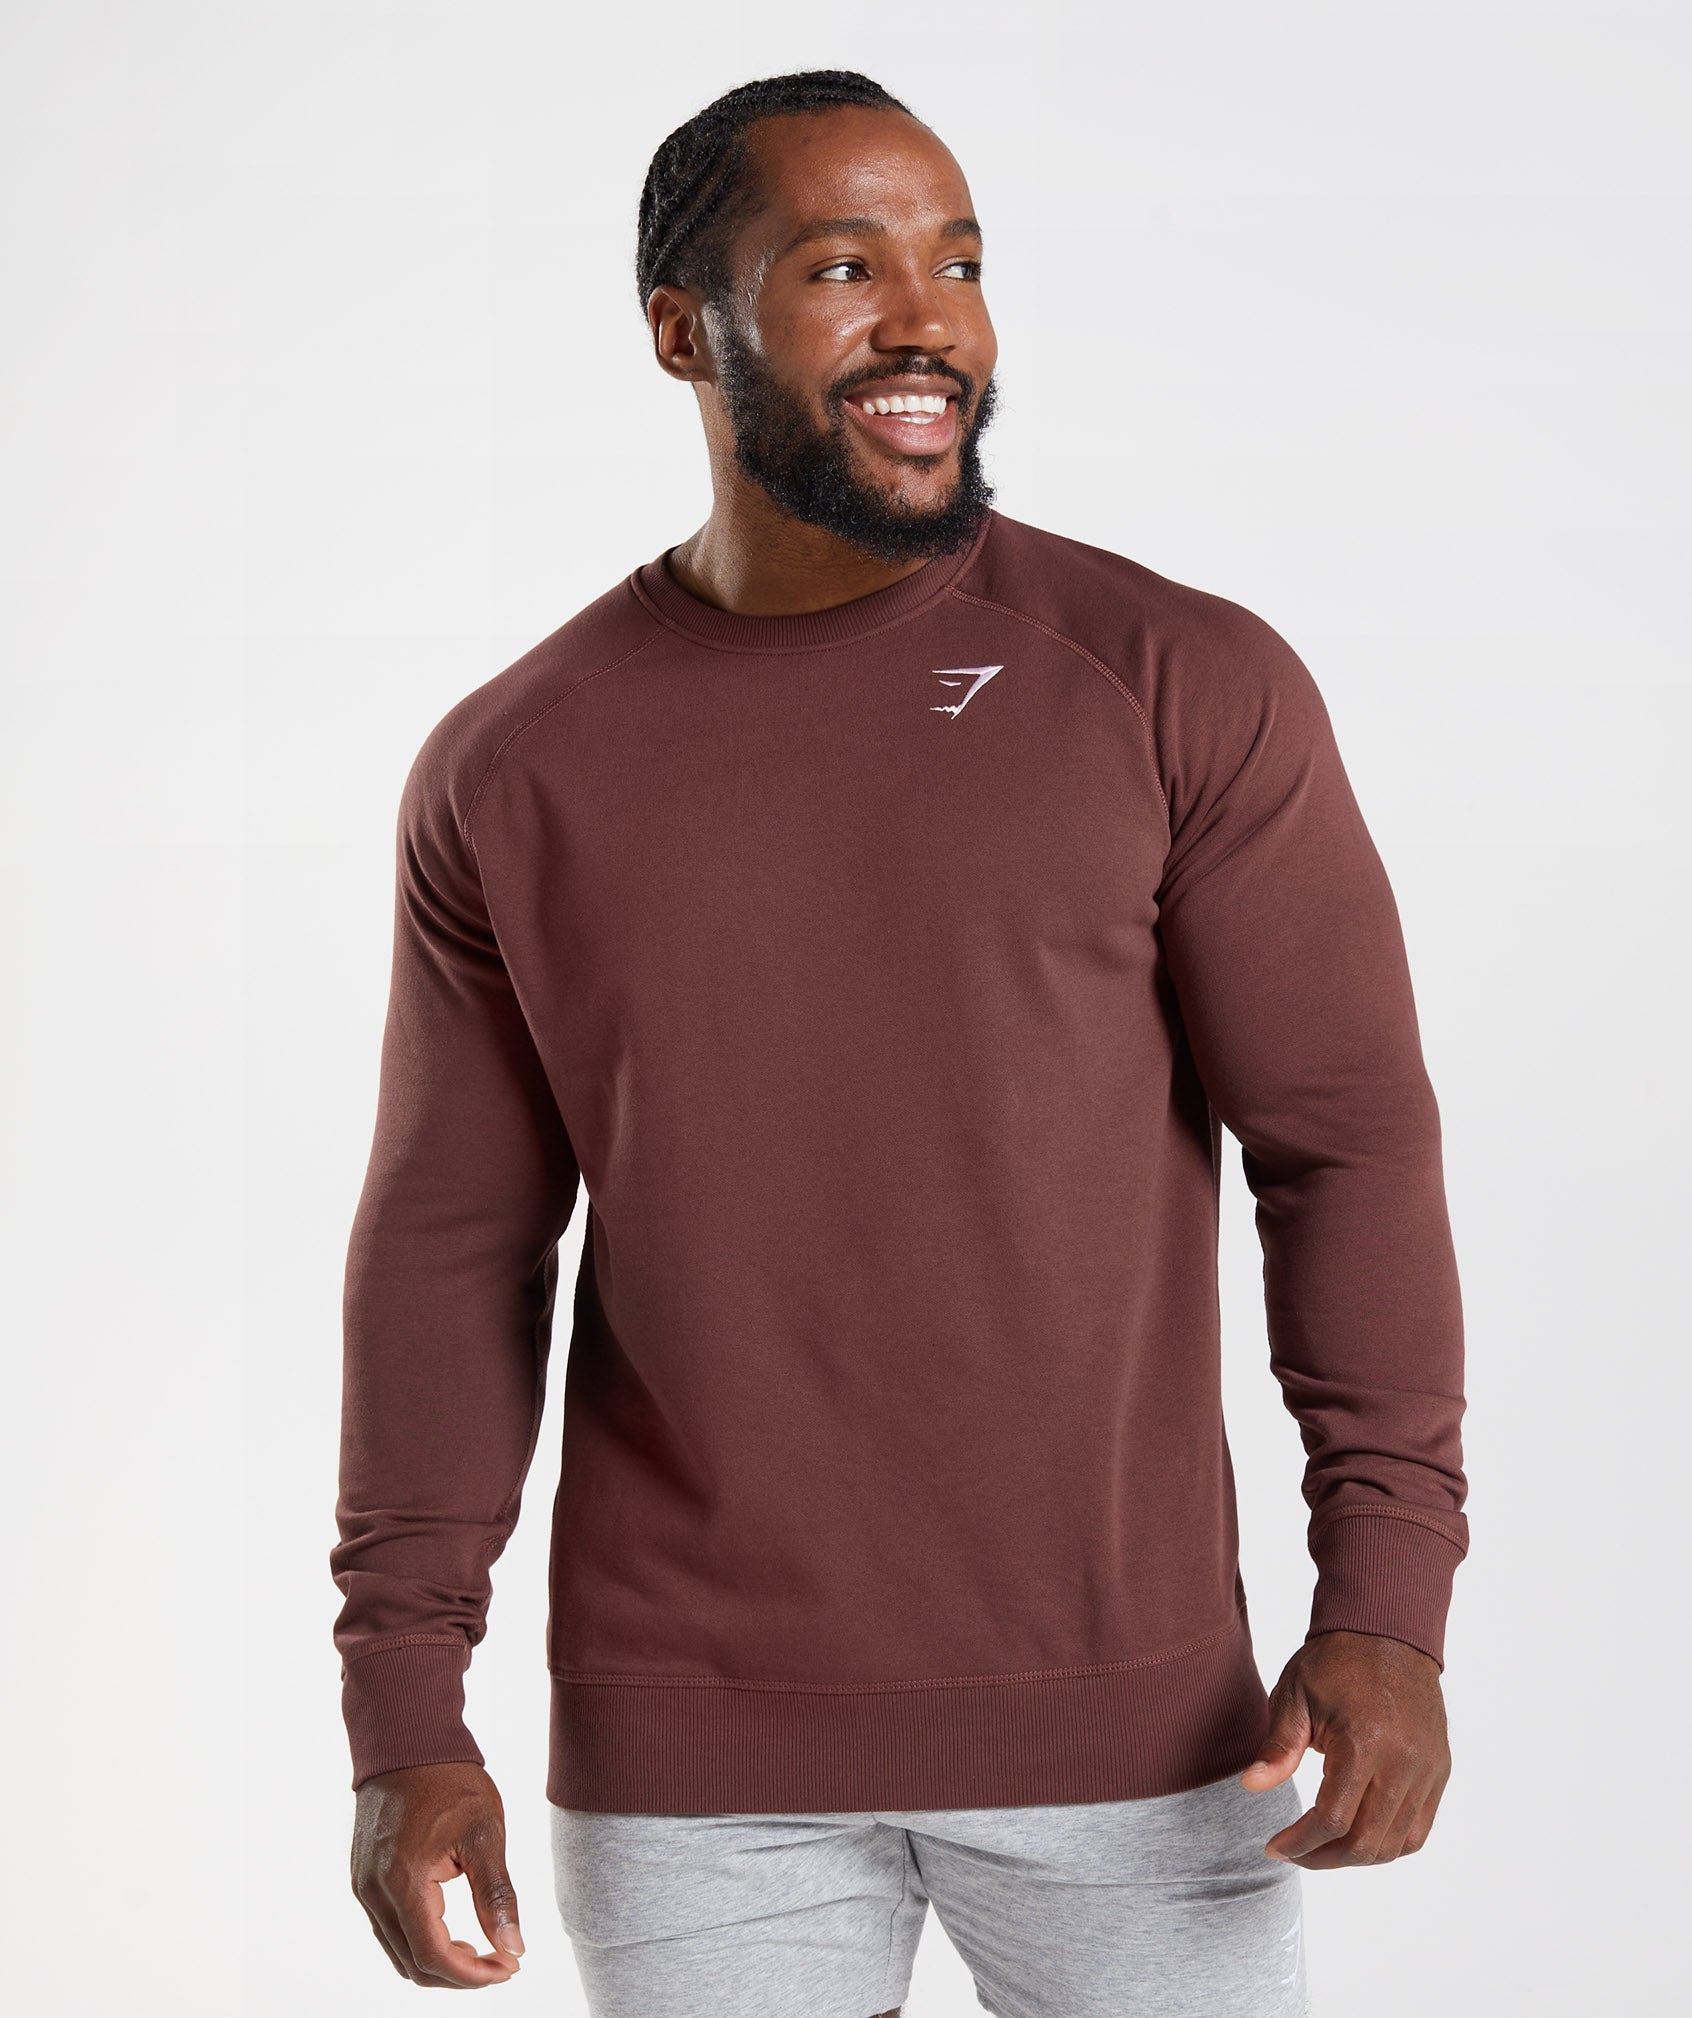 Gymshark Crest Sweatshirt - Cherry Brown